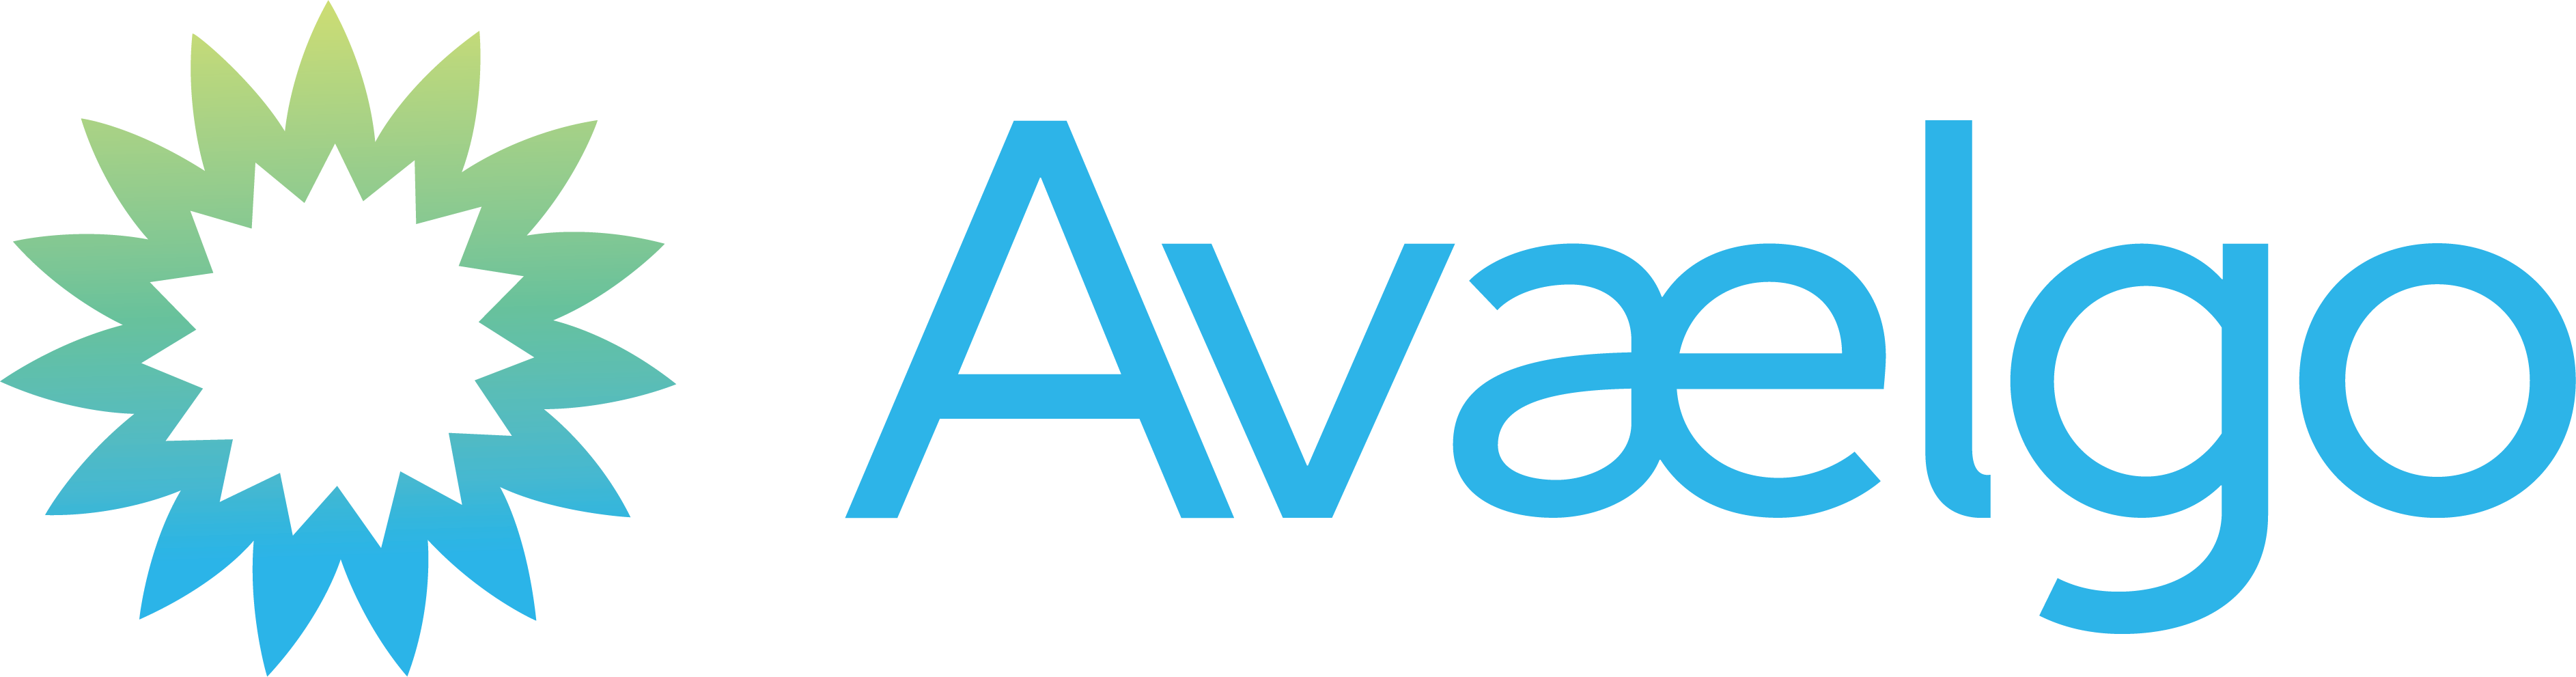 Logo Avaelgo